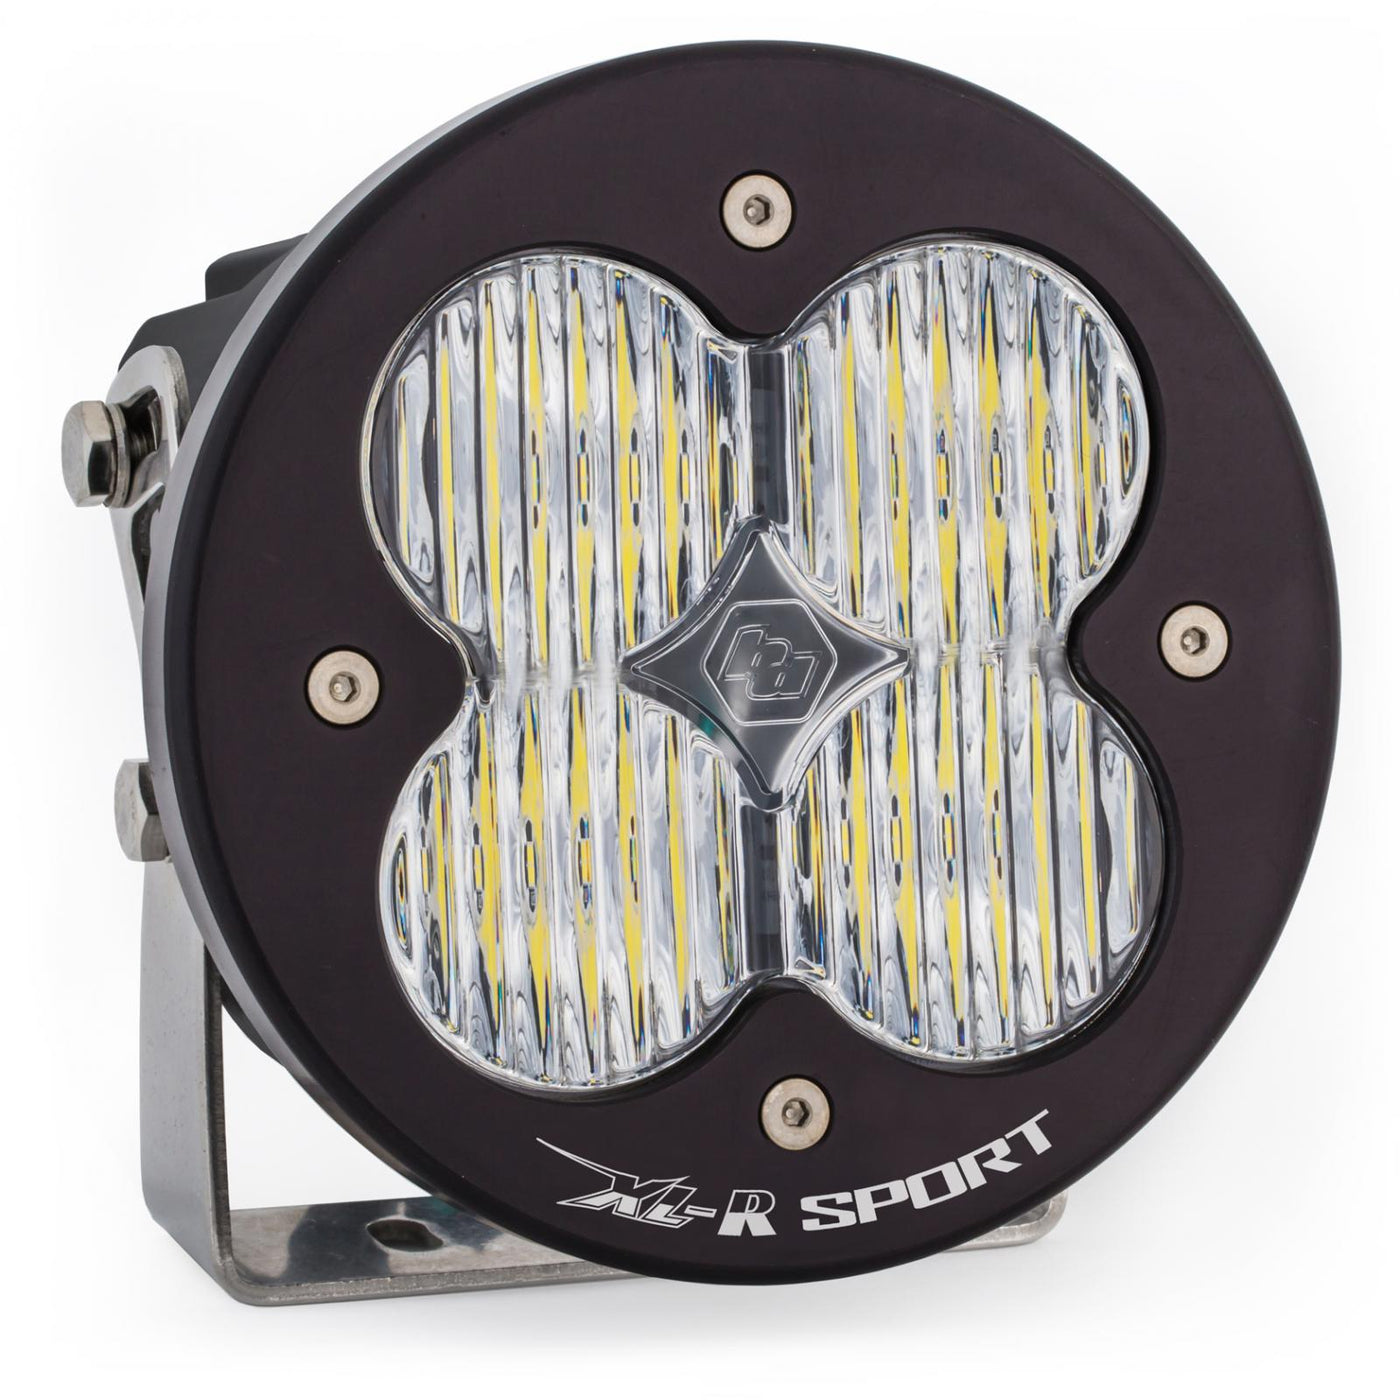 Baja Designs 570005 LED Light Pods Clear Lens Spot XL R Sport Wide Cornering